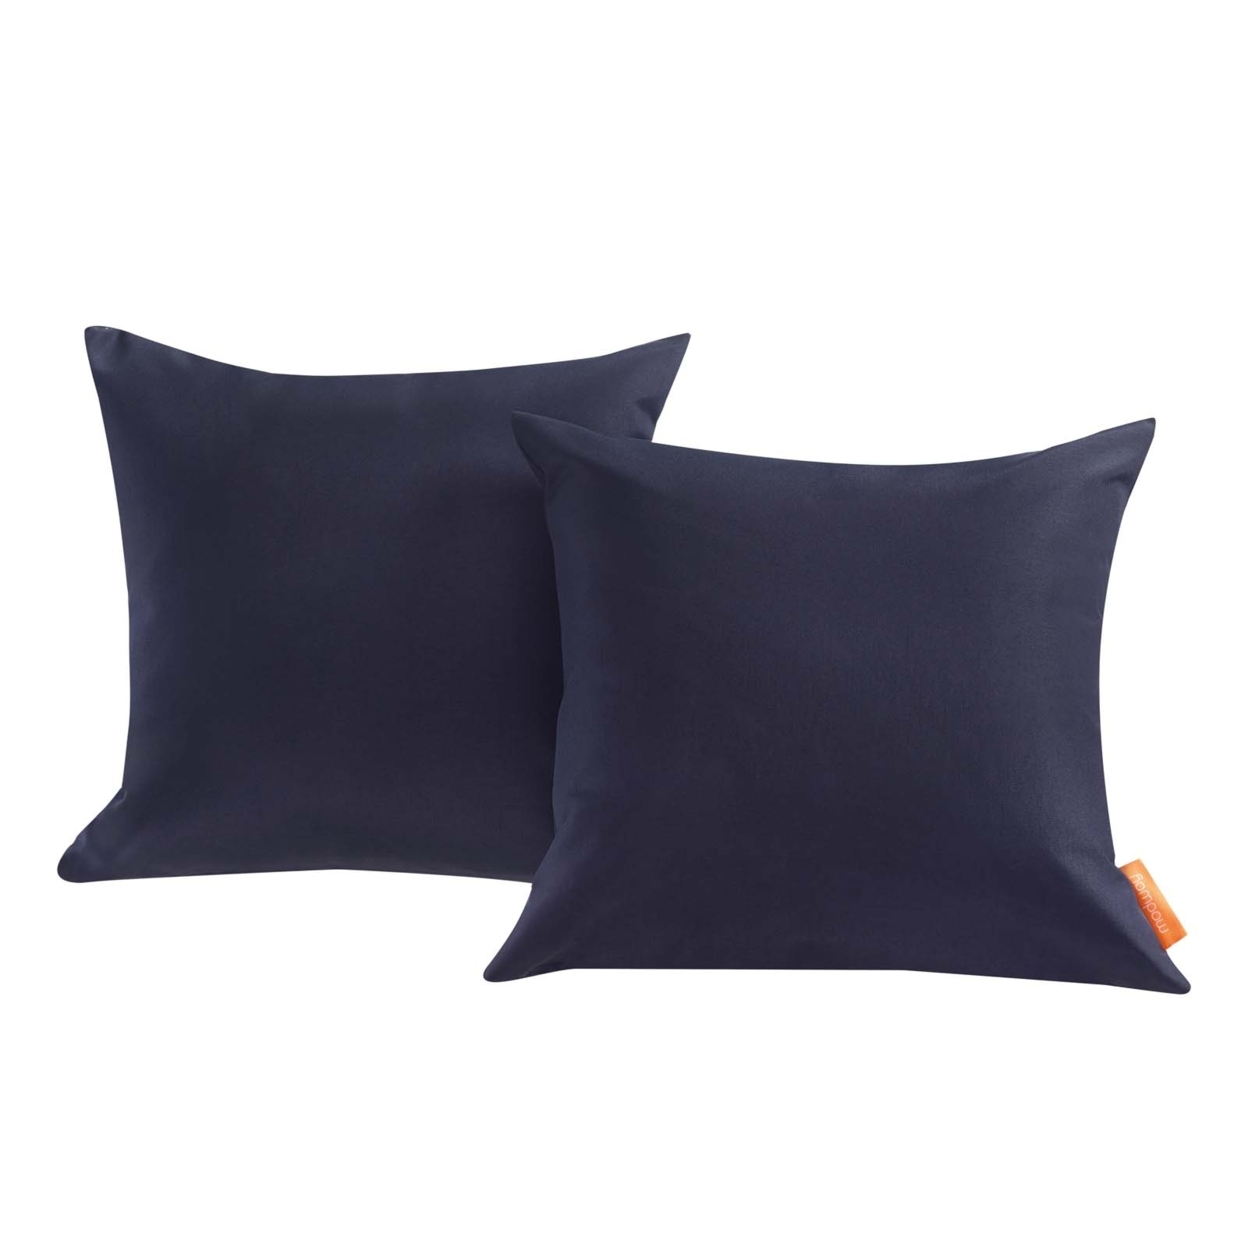 Convene Two Piece Outdoor Patio Pillow Set,Navy